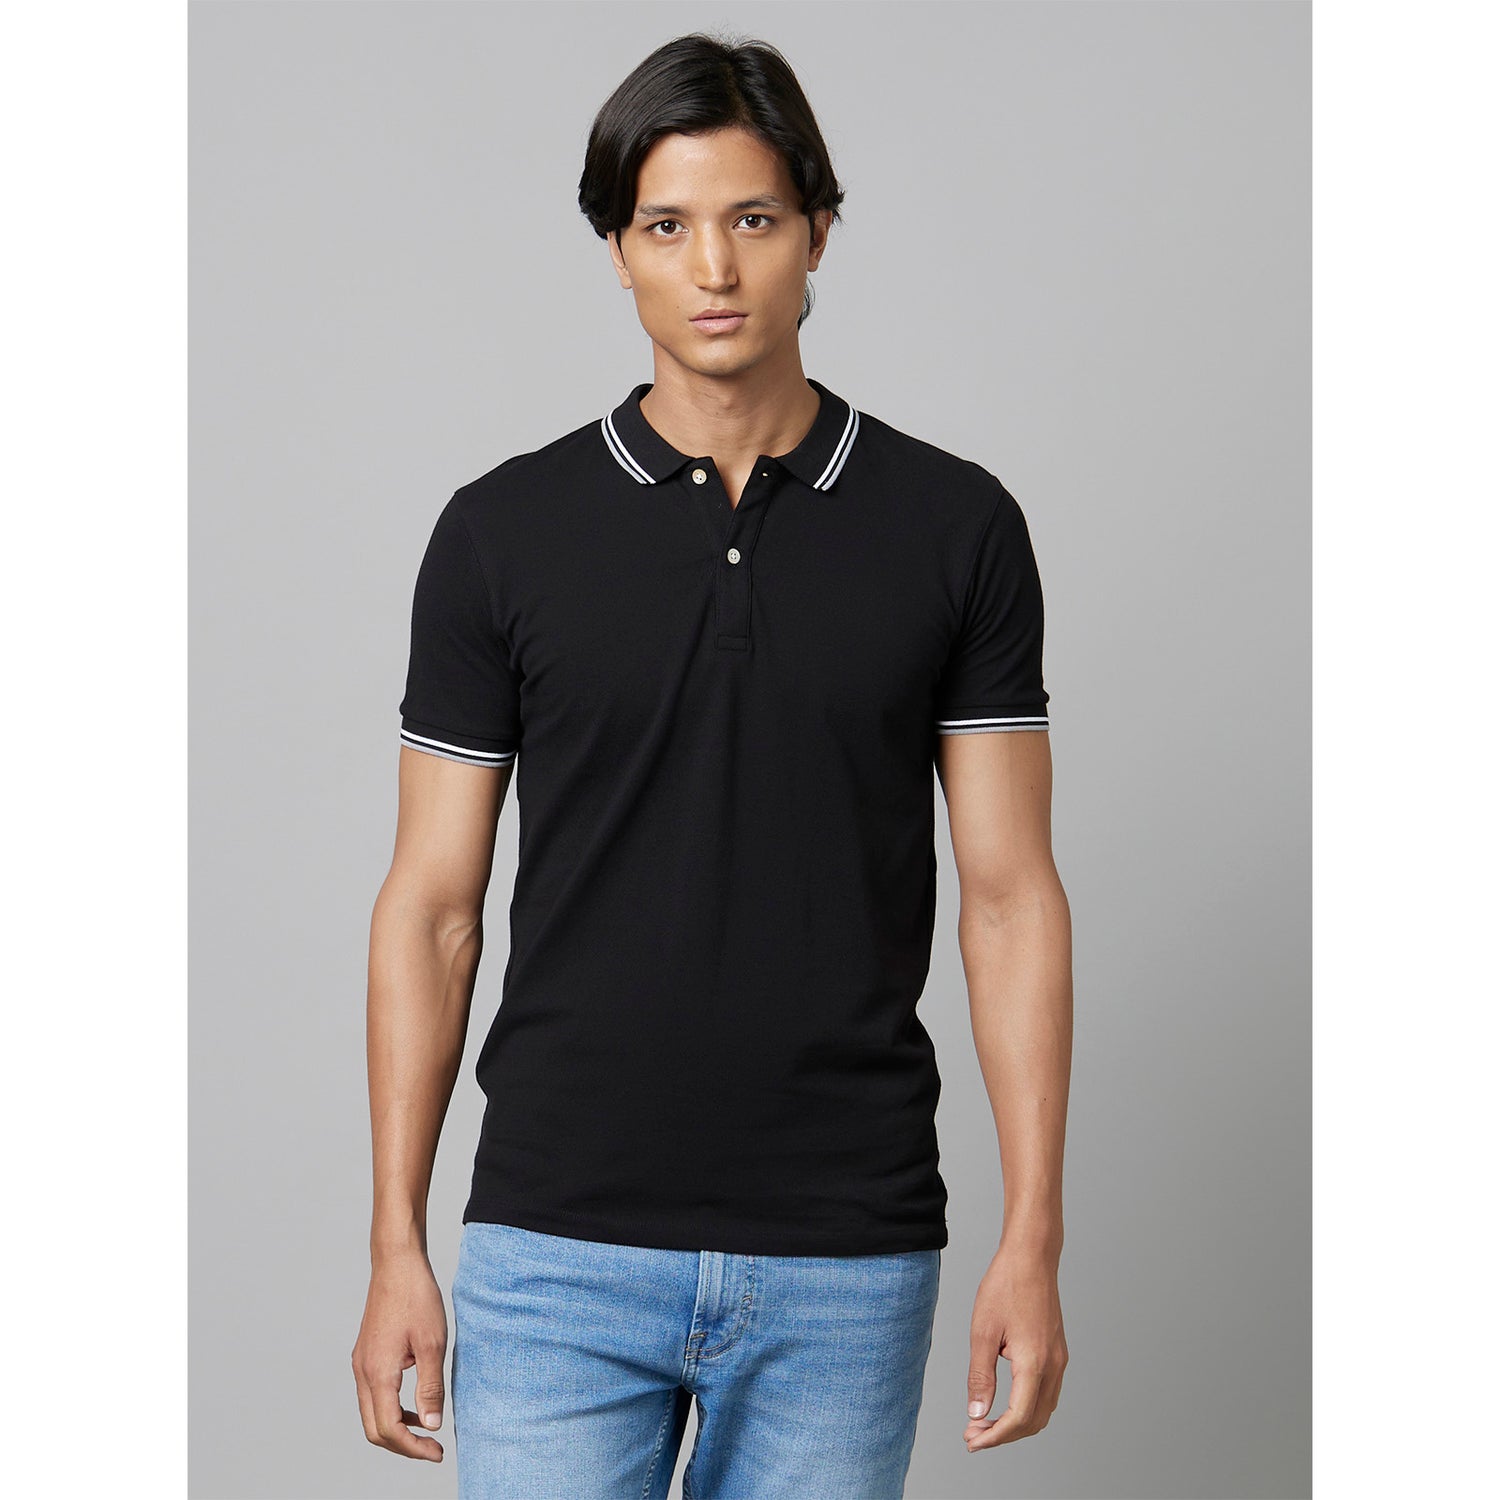 Black Solid Short Sleeves Polo T-Shirt